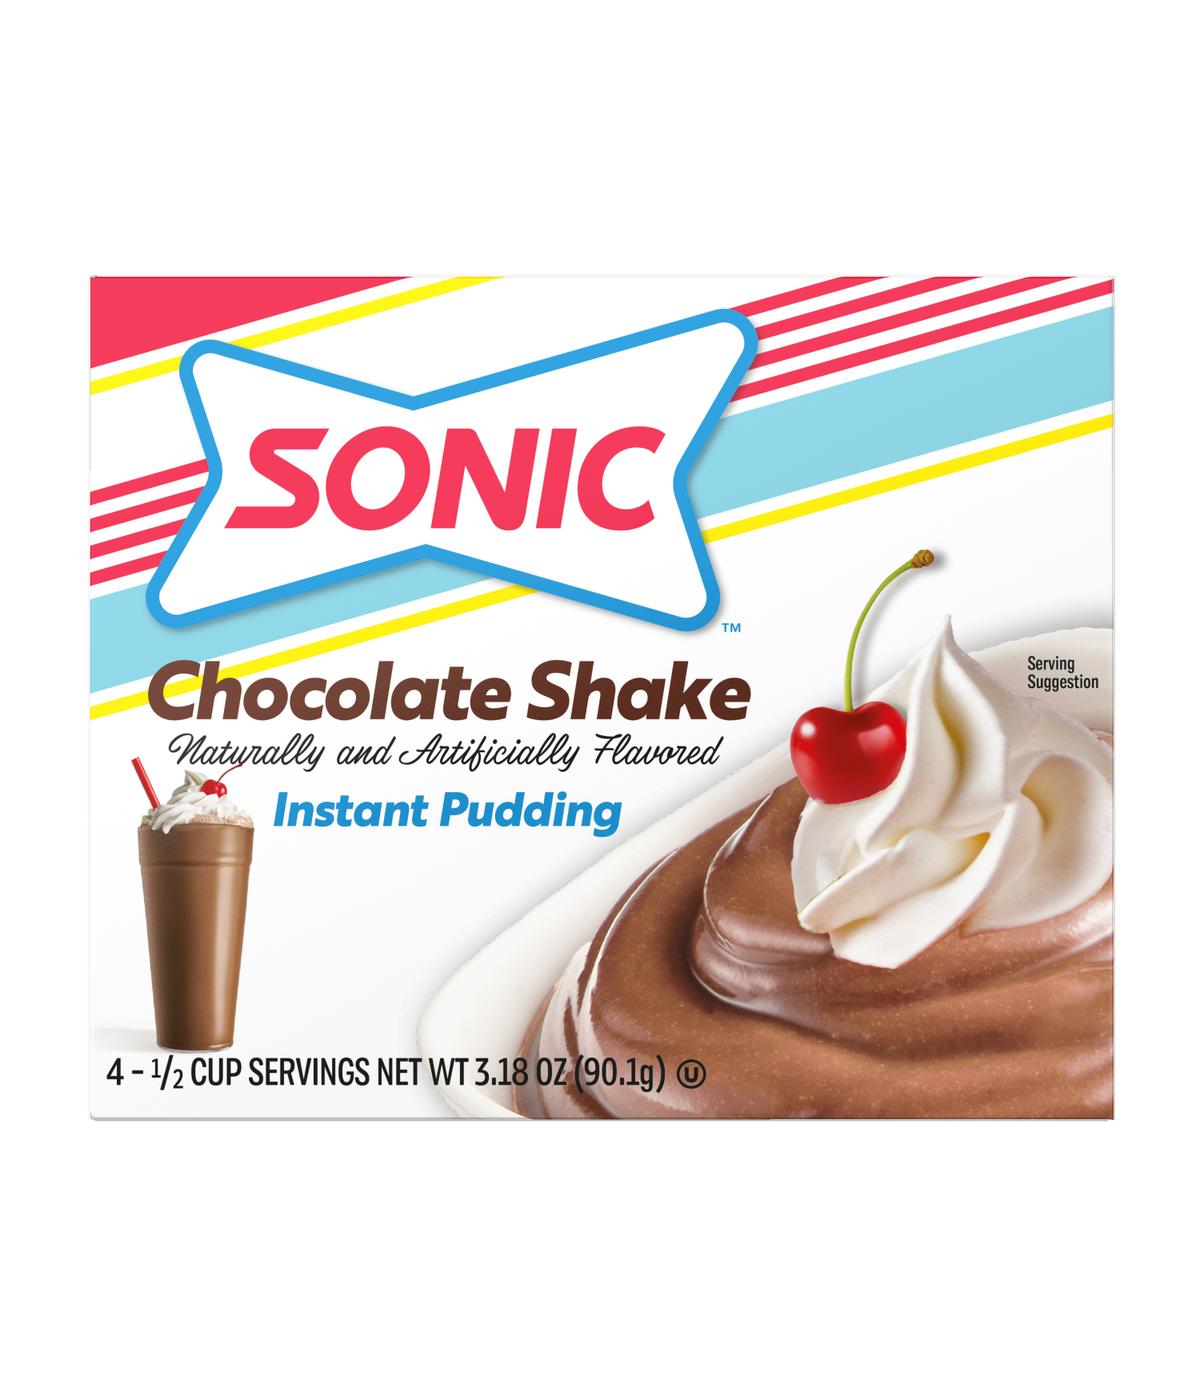 Sonic Pudding - Chocolate Shake; image 1 of 2